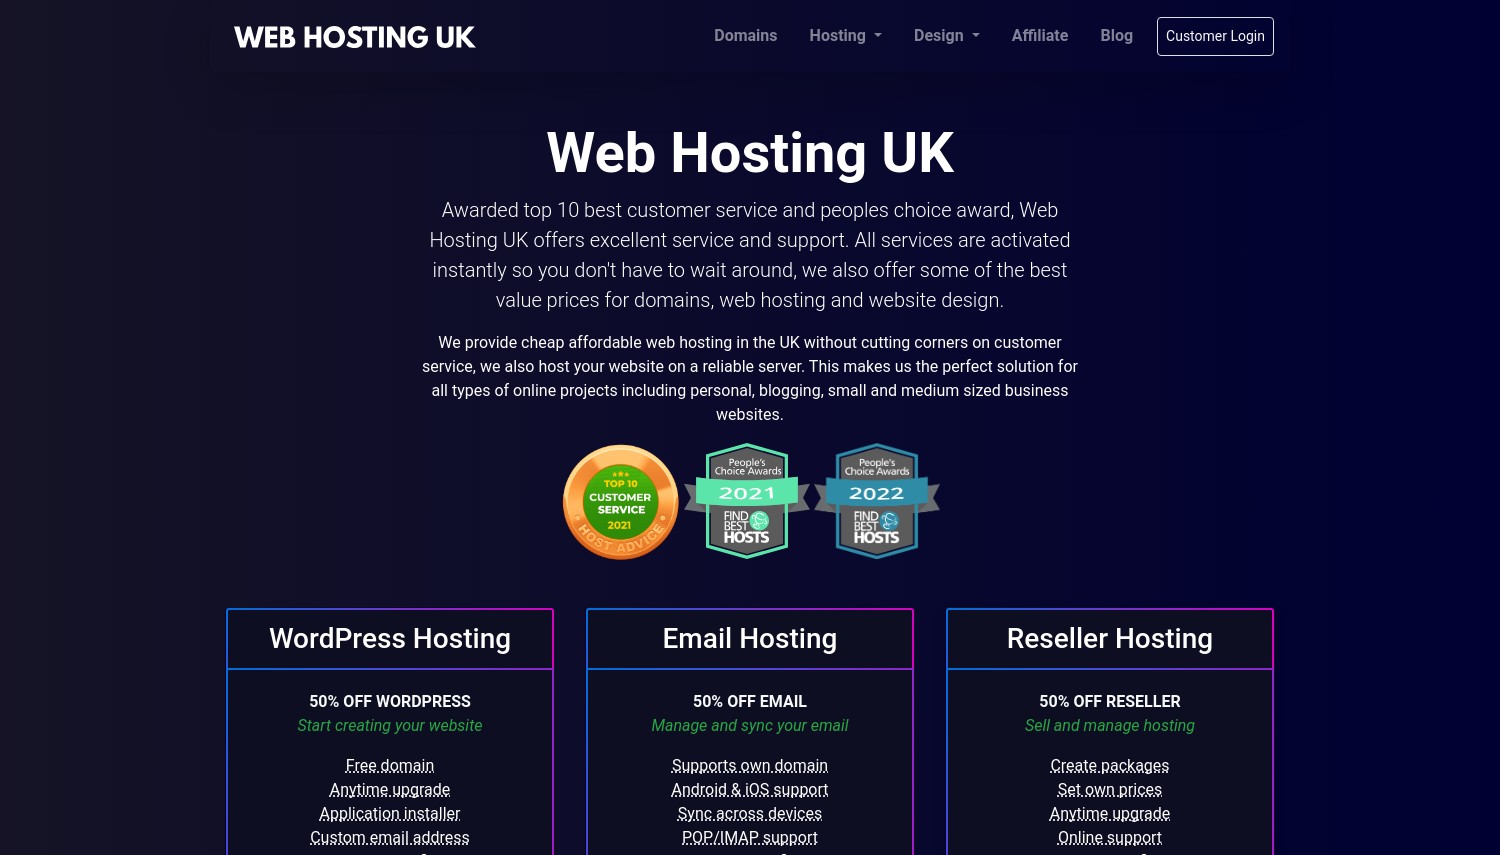 Web Hosting UK (WHUK) snapshot from December 2023